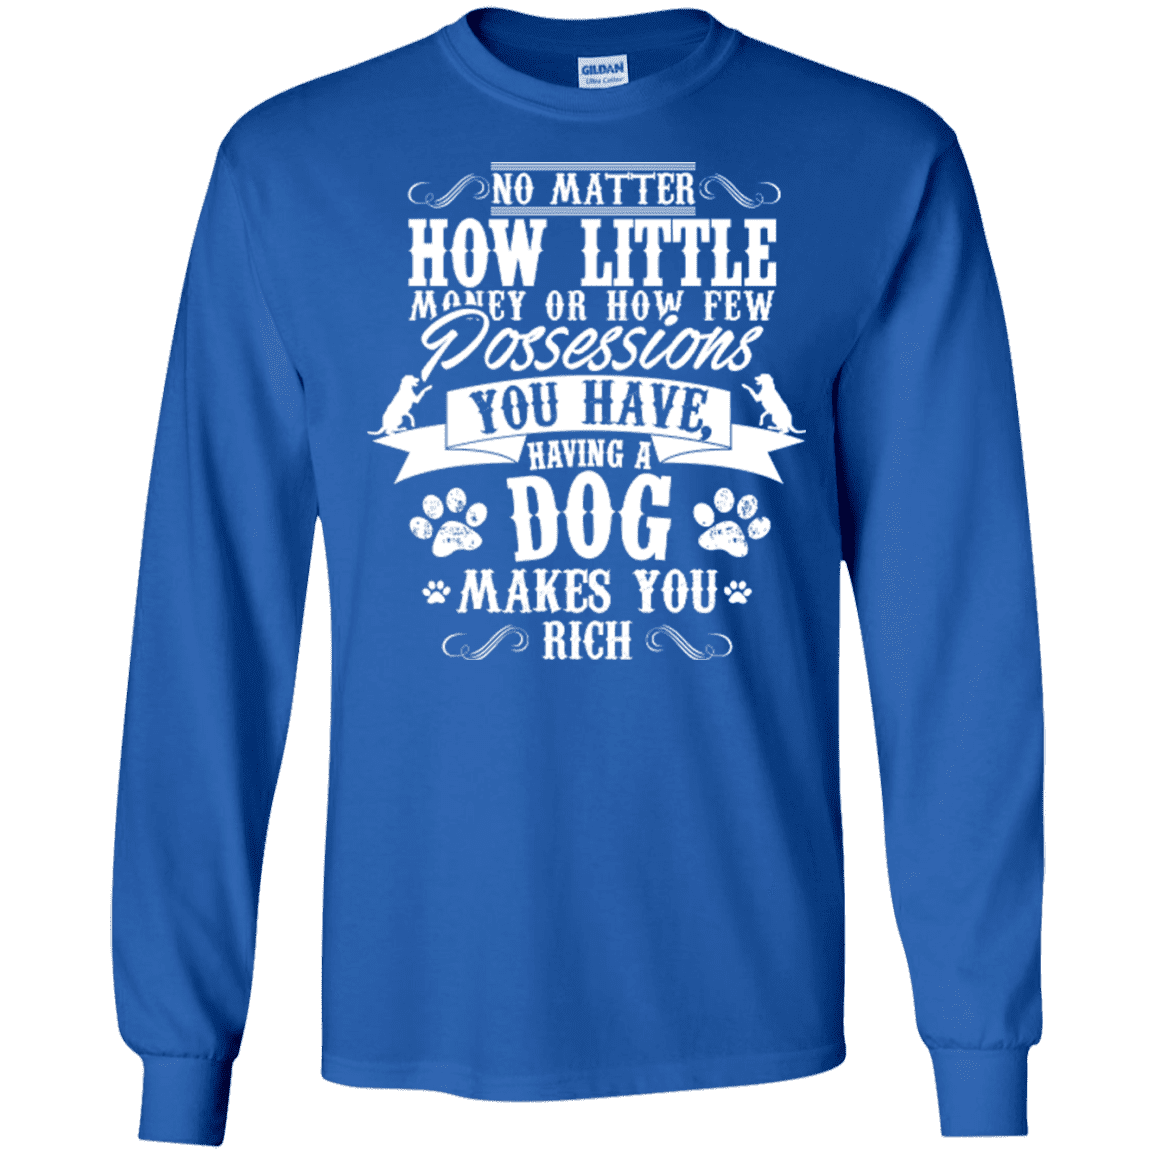 Dogs Make You Rich - Long Sleeve T Shirt.